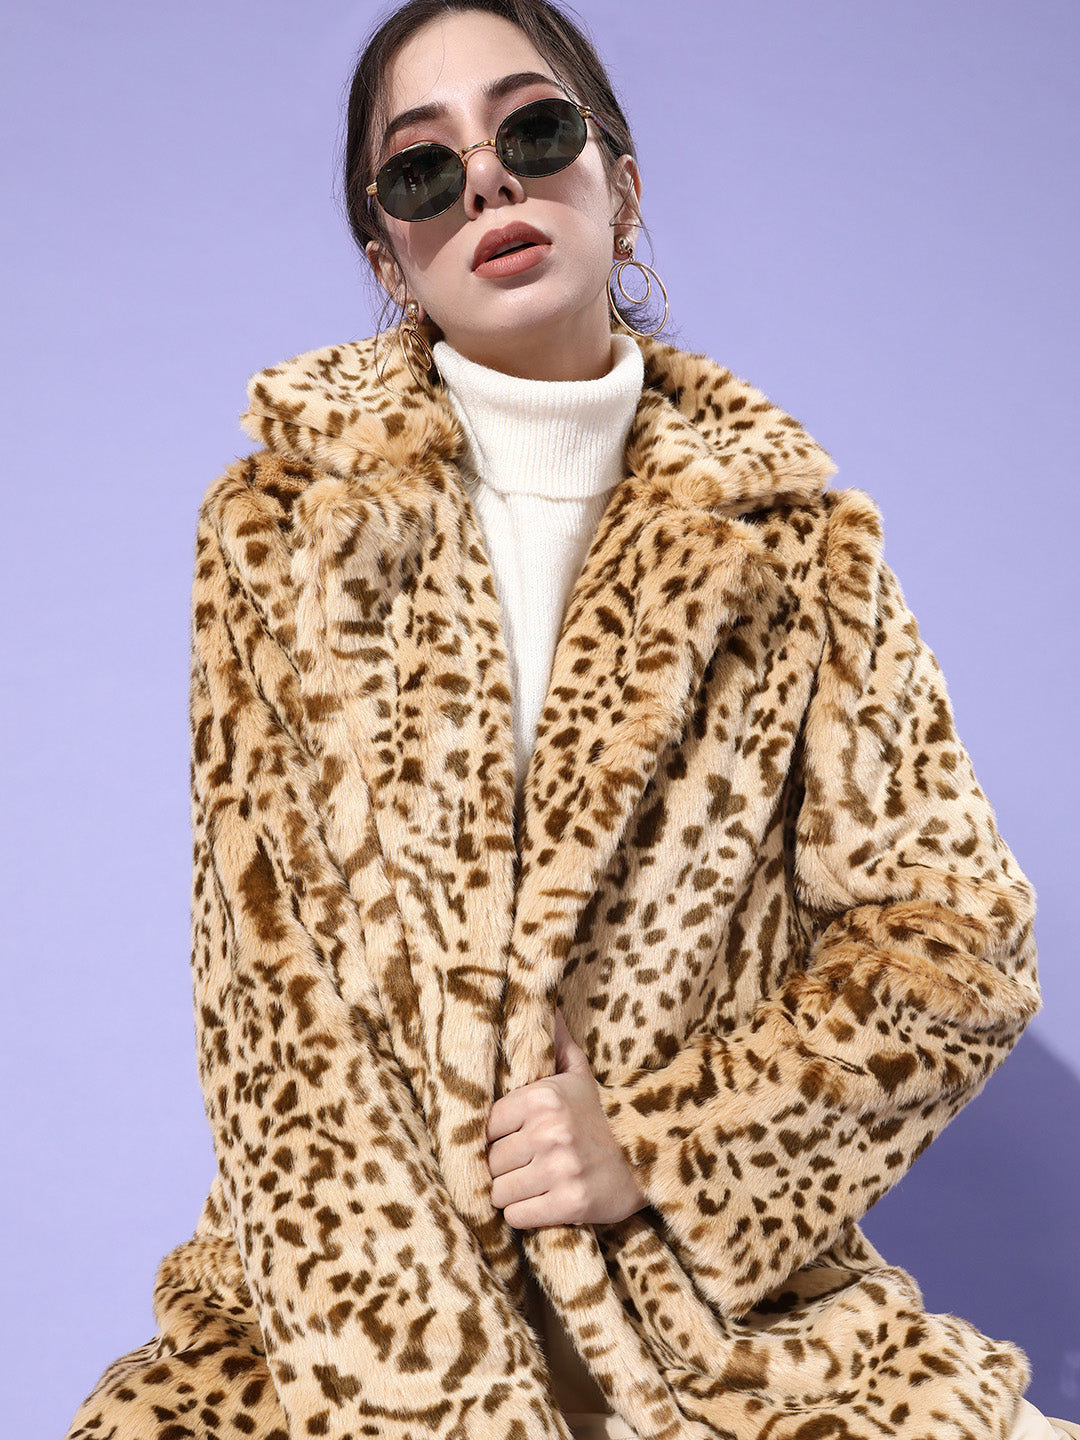 Athena Olive-Tan Animal print Faux Fur Trench Coat with pocket detail - Athena Lifestyle